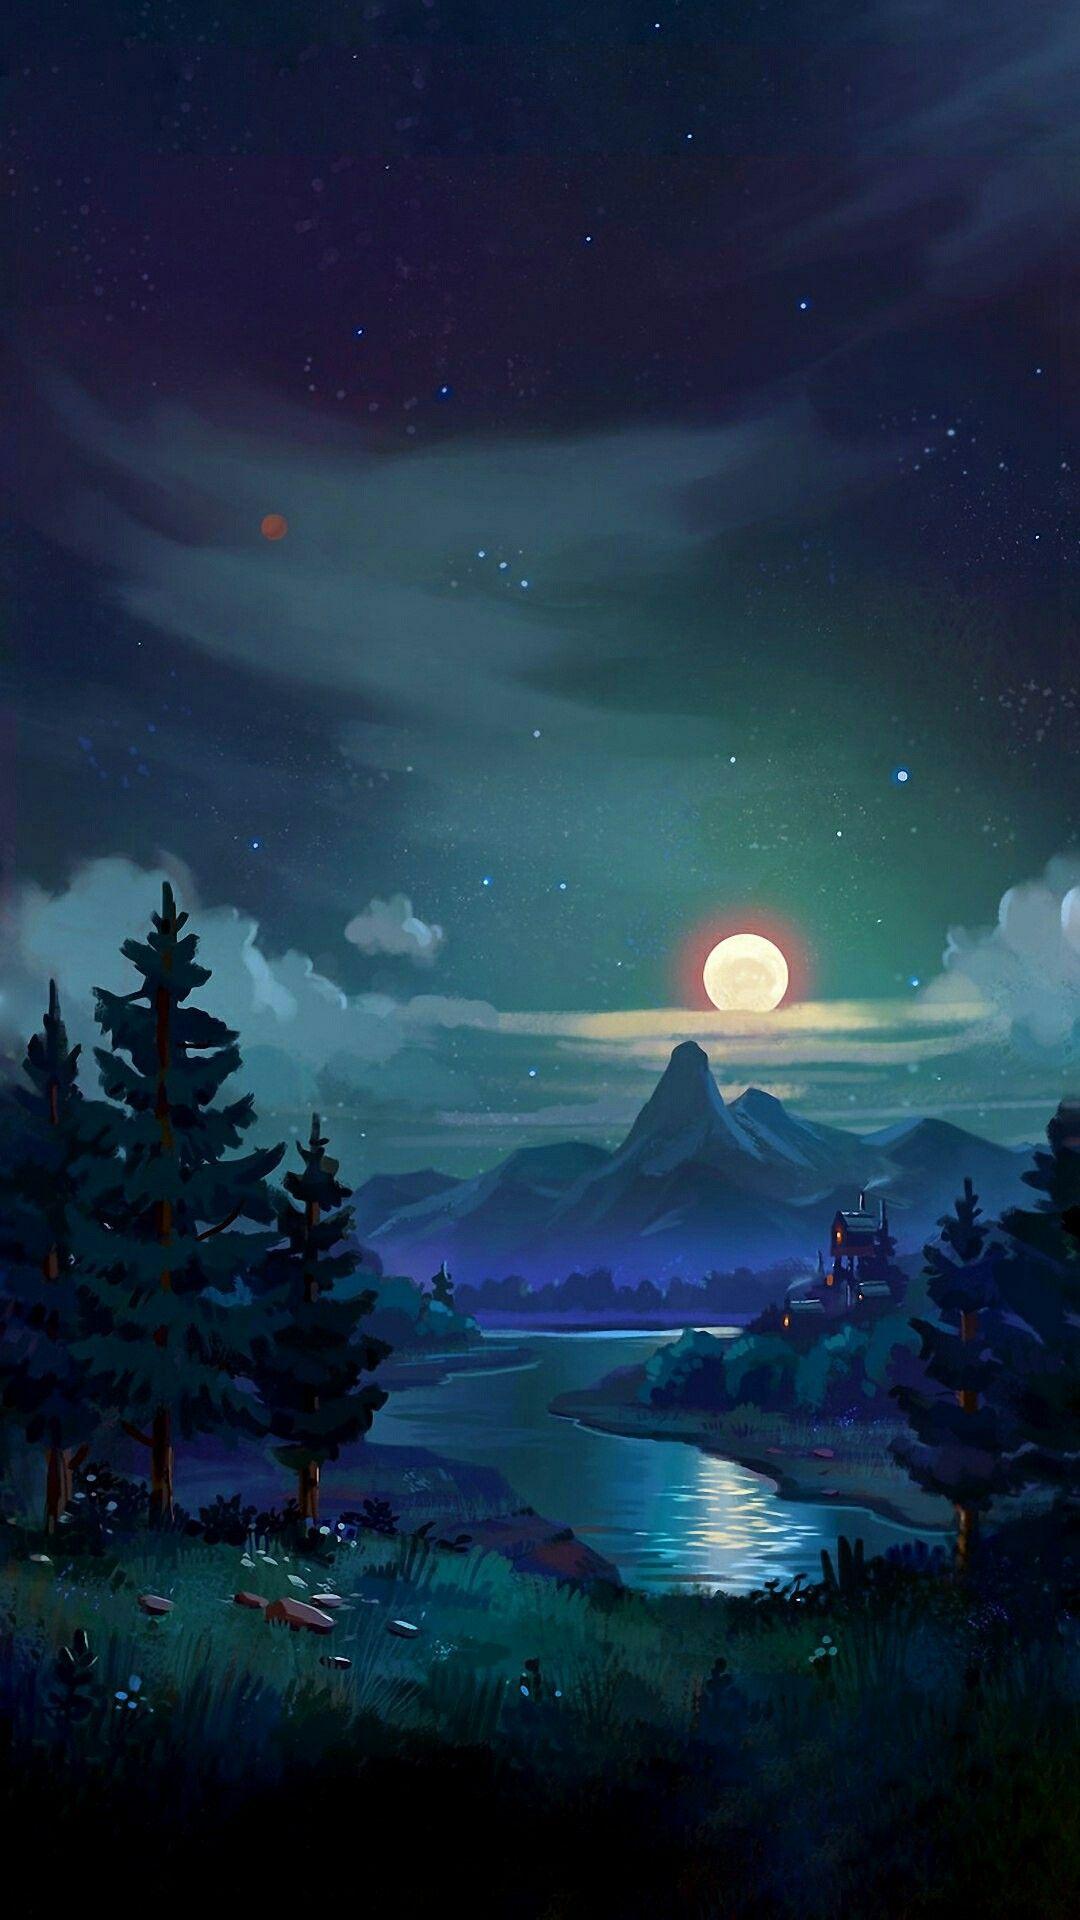 Animated wallpaper. Anime scenery